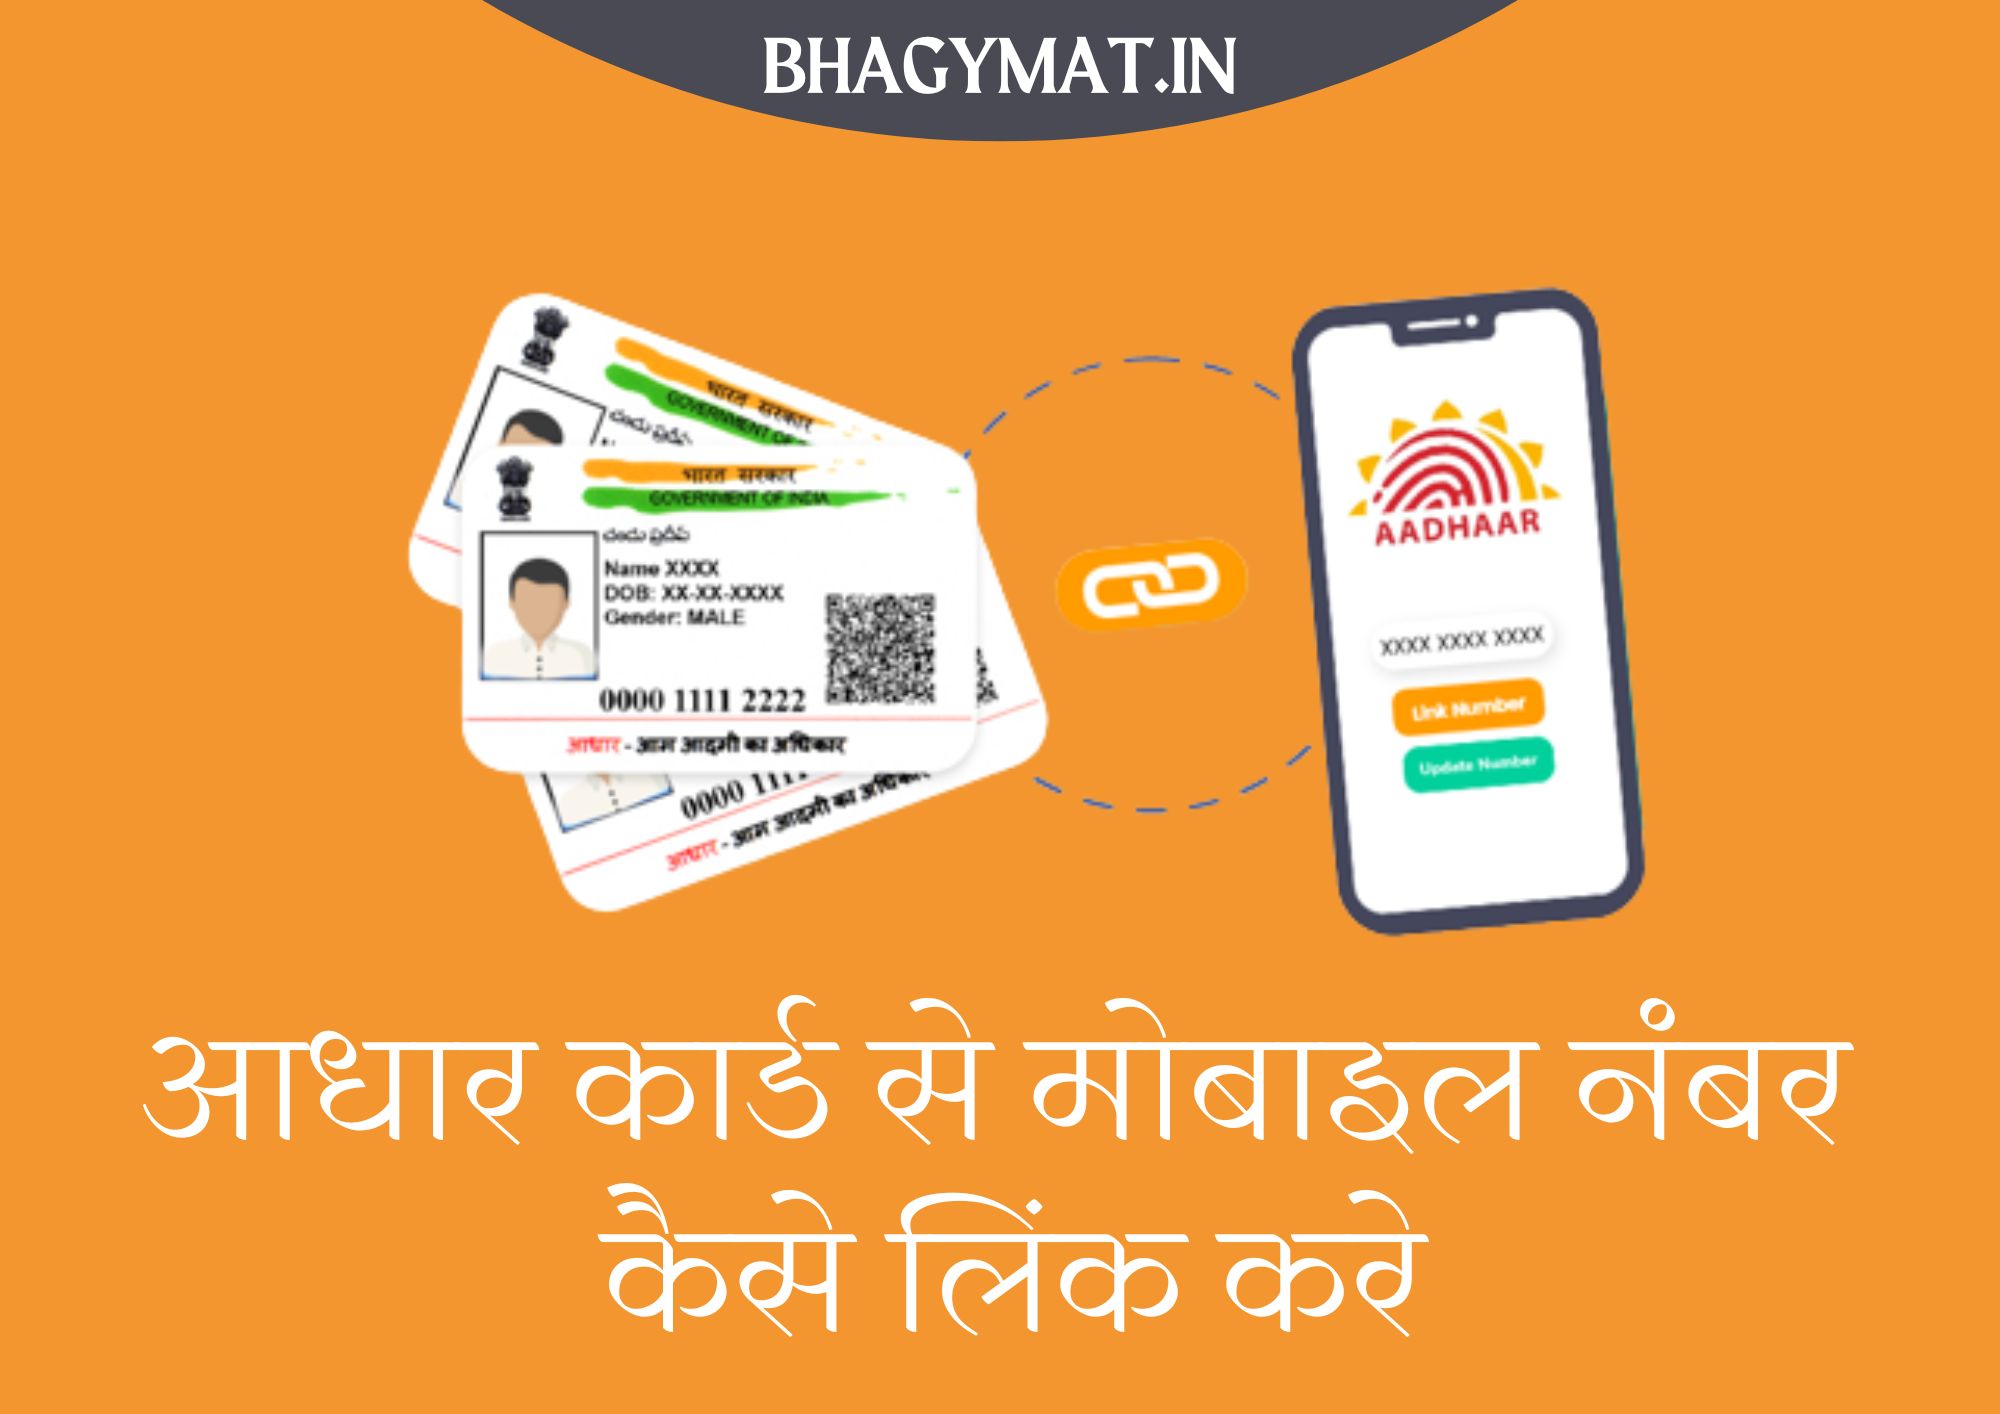 आधार कार्ड से मोबाइल नंबर कैसे लिंक करे - Aadhar Card Se Mobile Number Kaise Link Kare